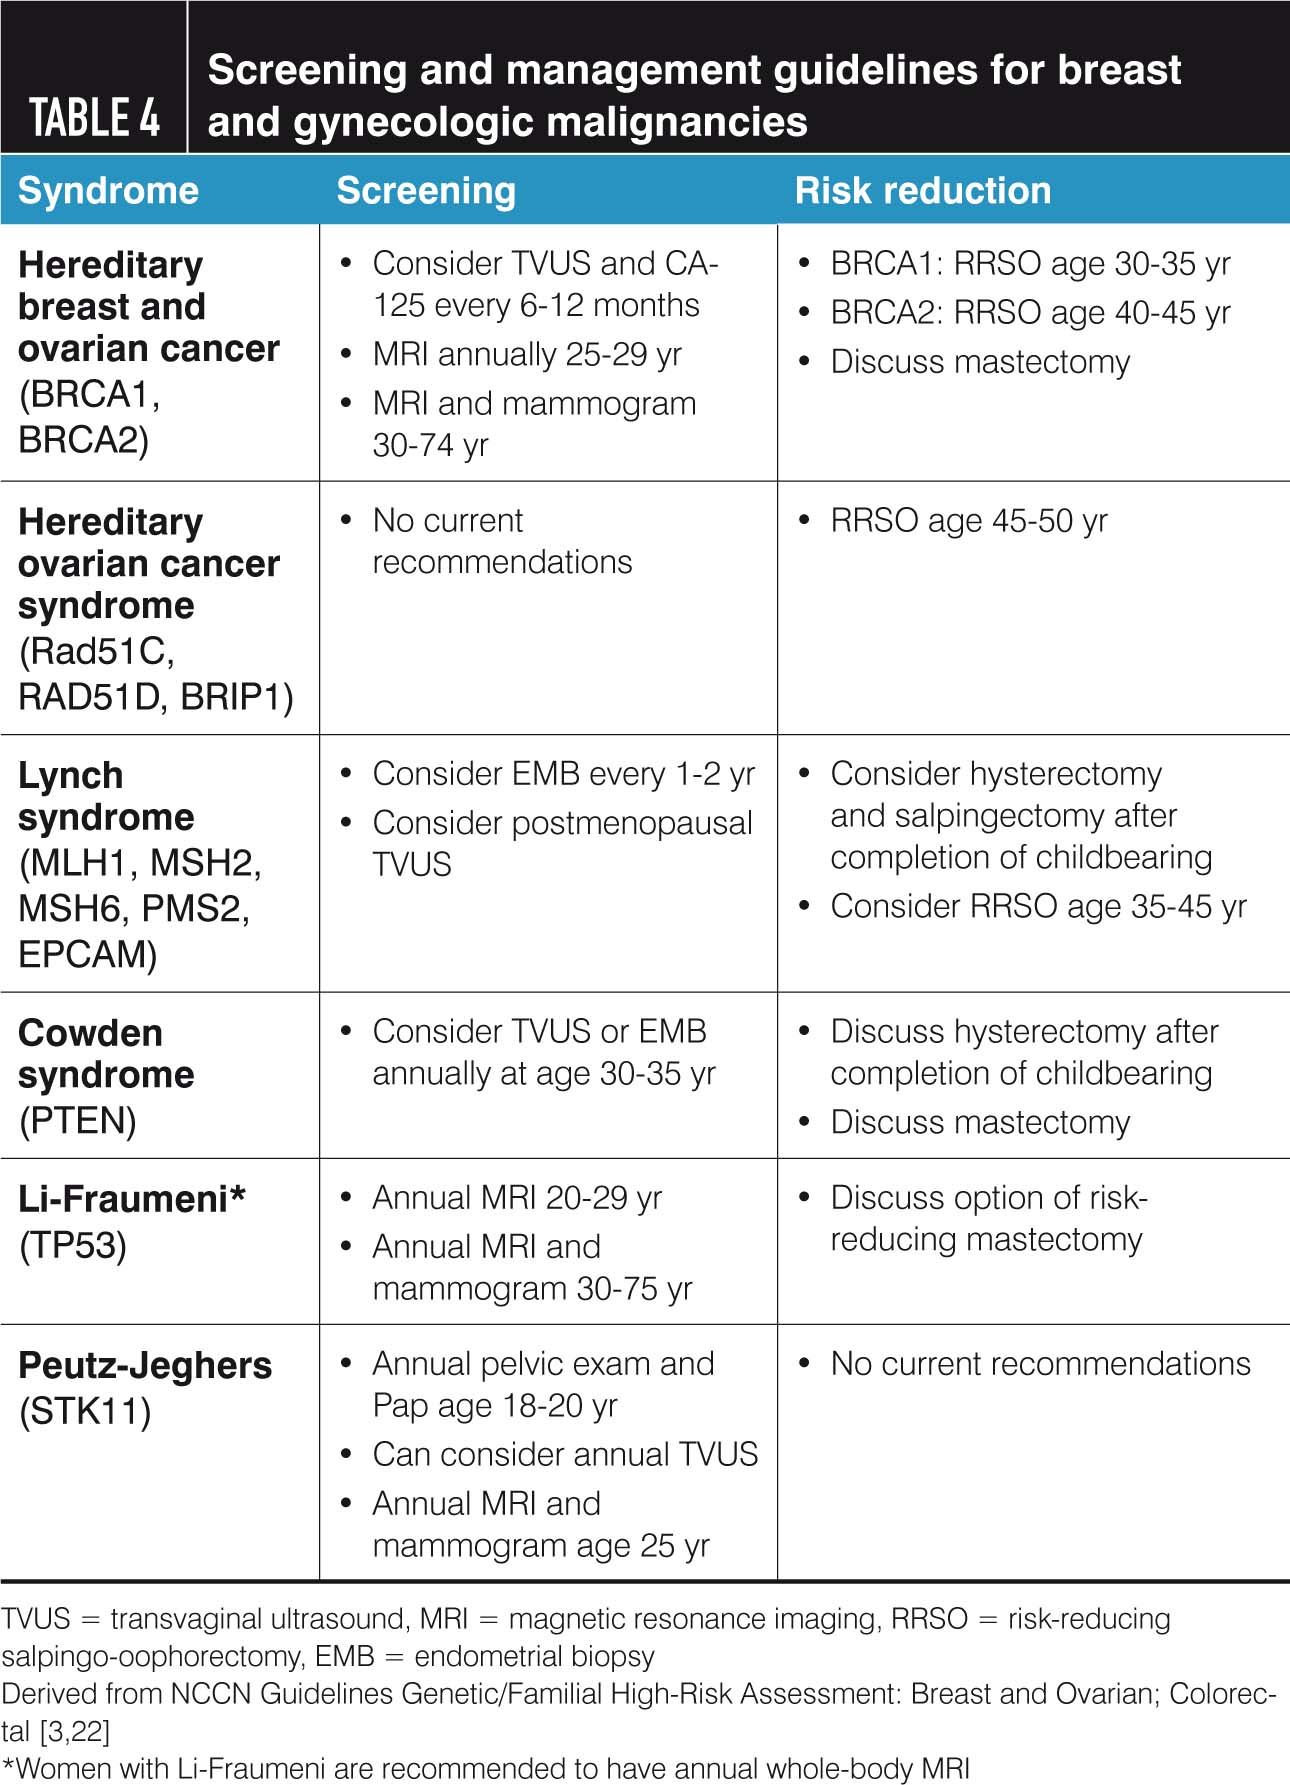 Familial cancer and genes. Mutații BRCA1 și BRCA2 - cancer ereditar sân/ovar (analiza) - Synevo